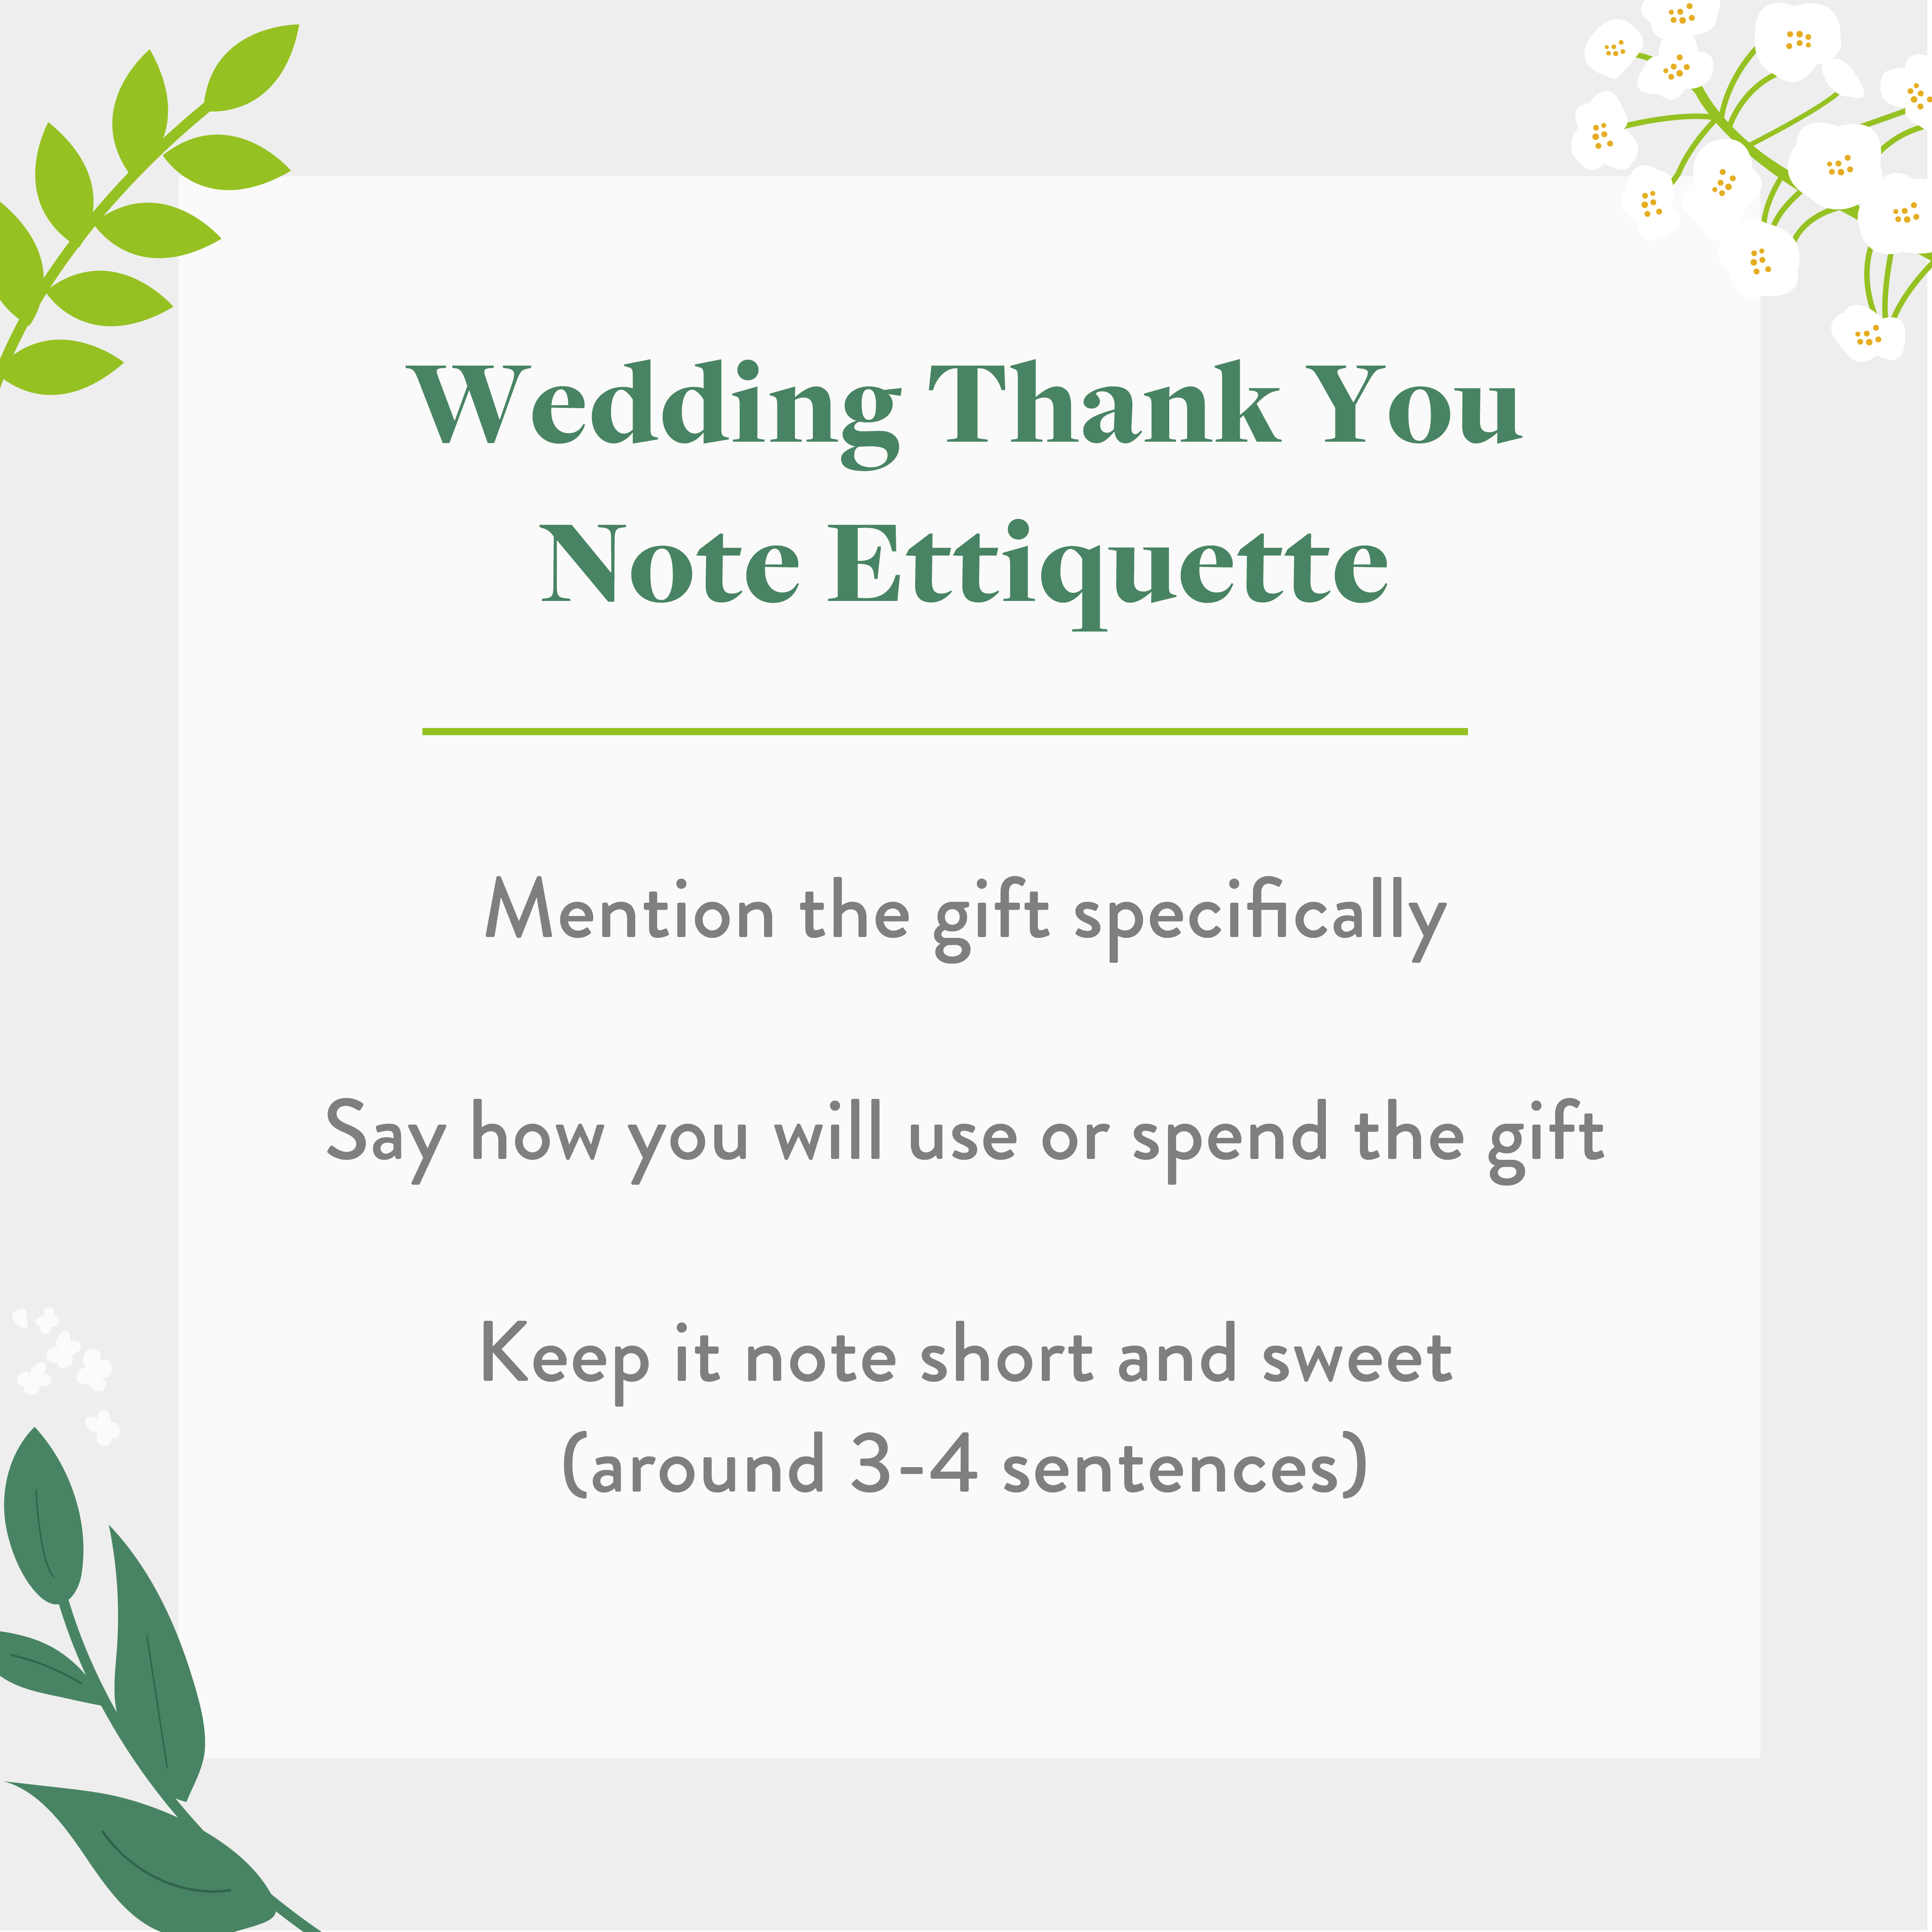 Tips For Sending Wedding Thank You Cards - Botanical PaperWorks